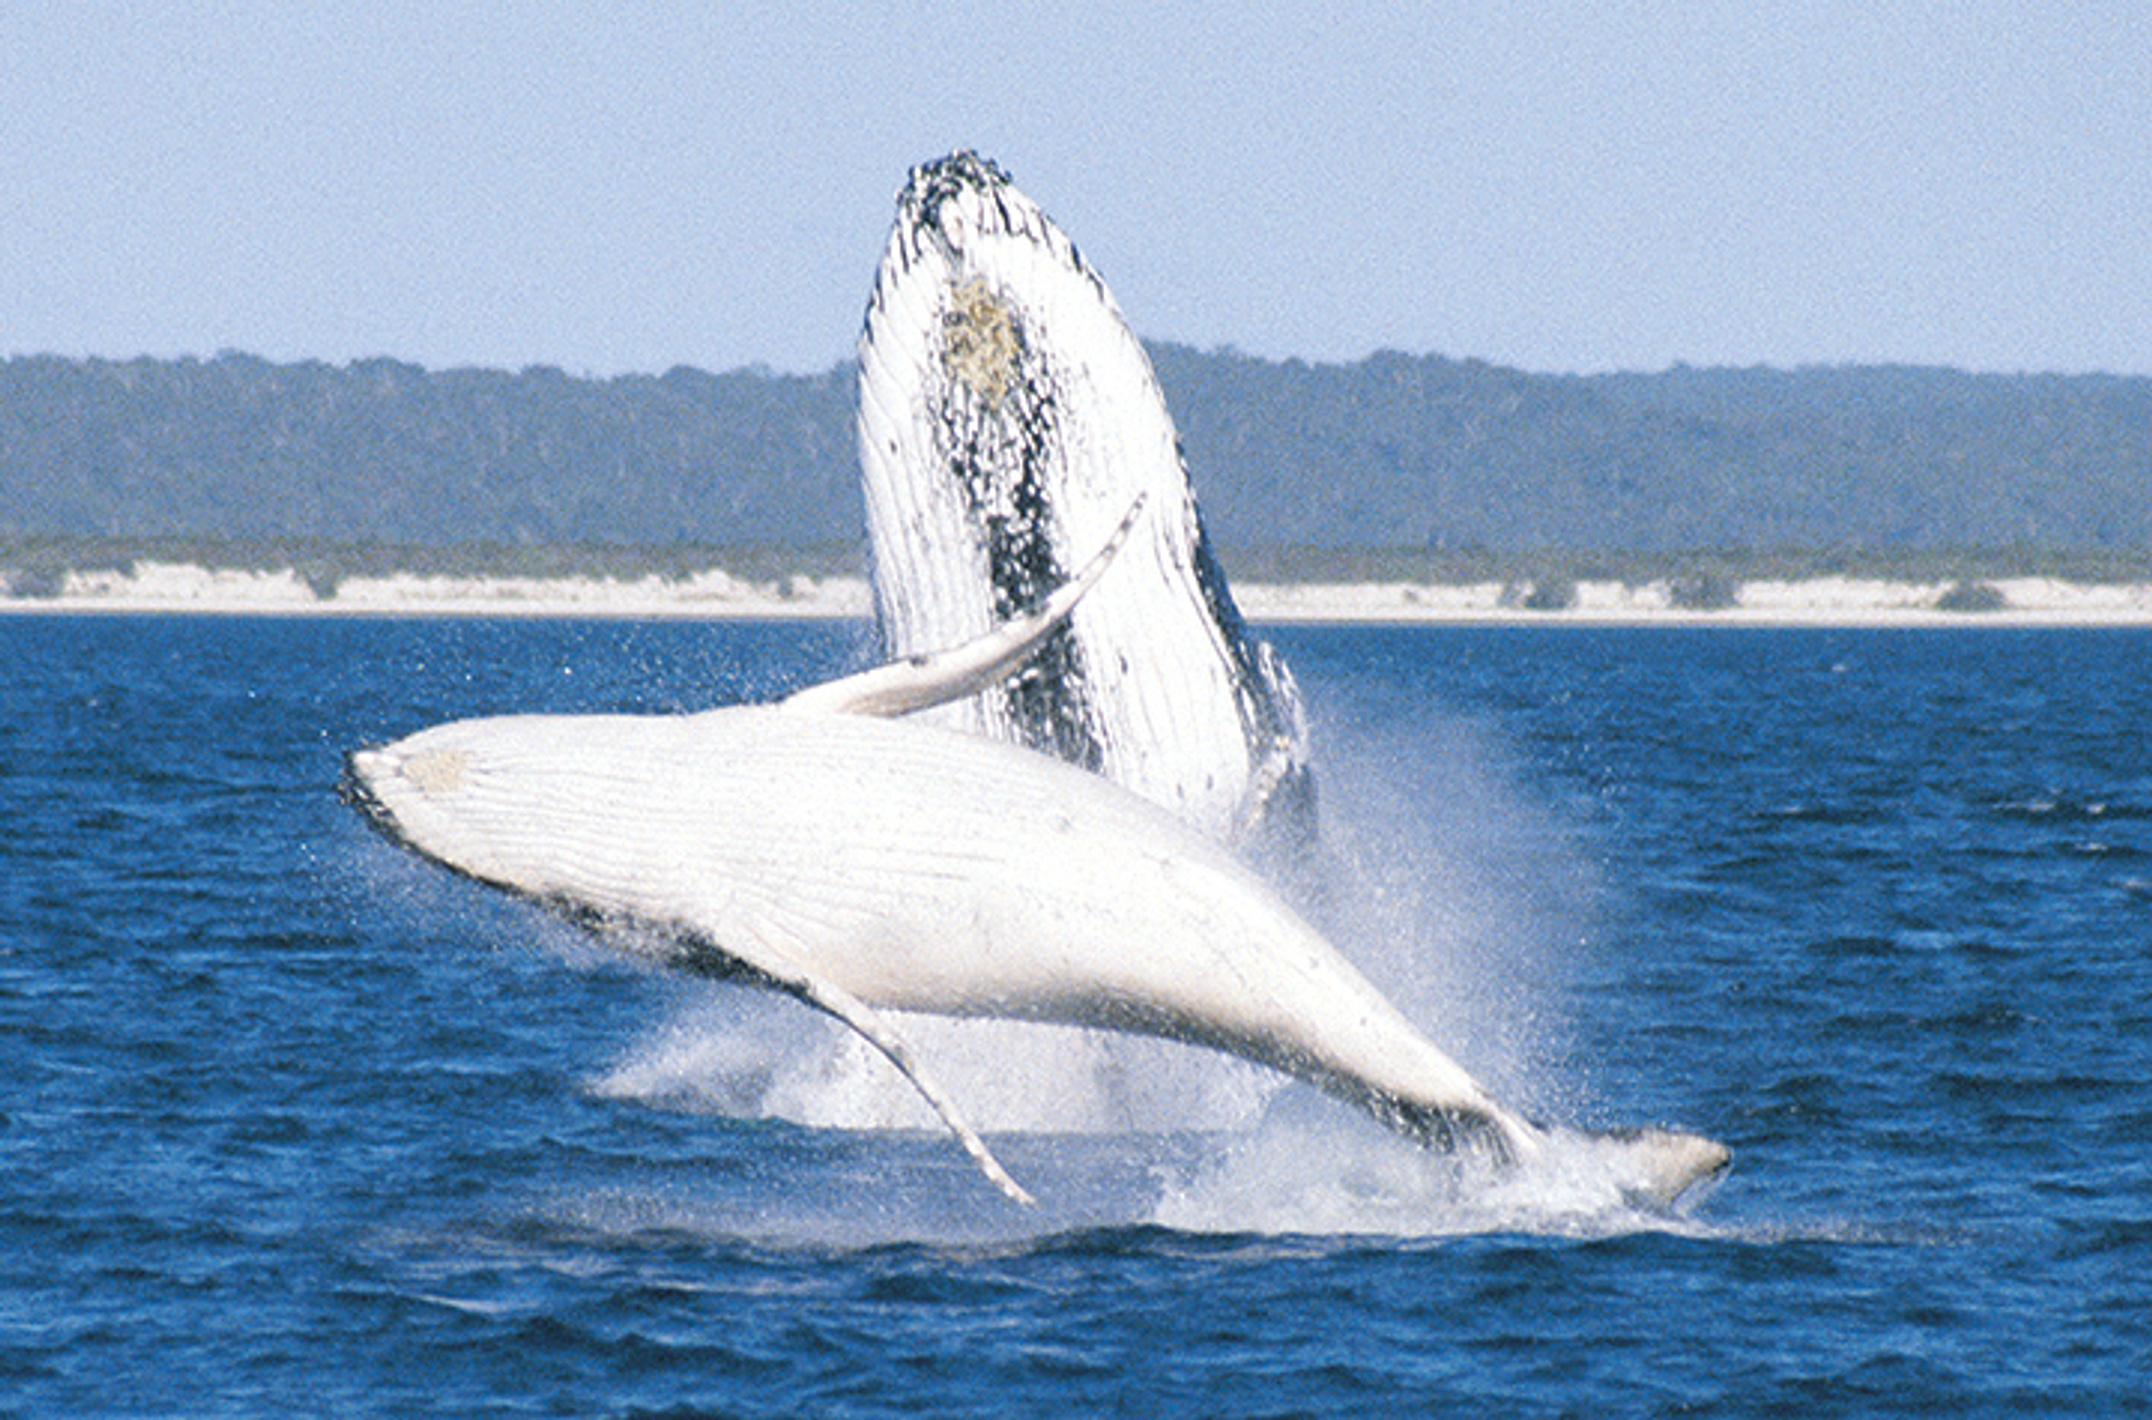 Whale and calf breaching